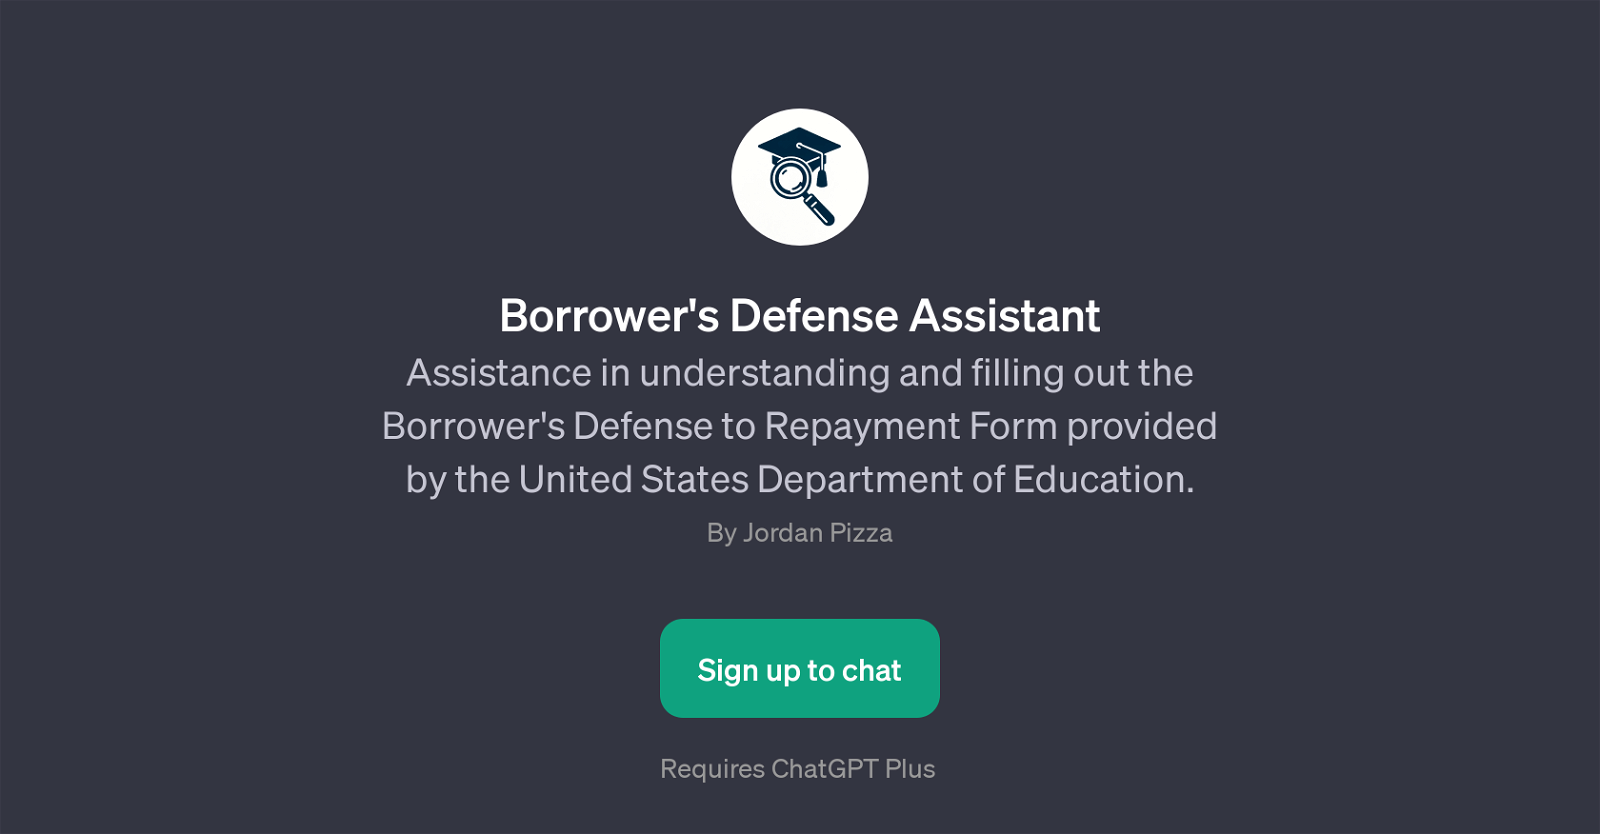 Borrower's Defense Assistant website